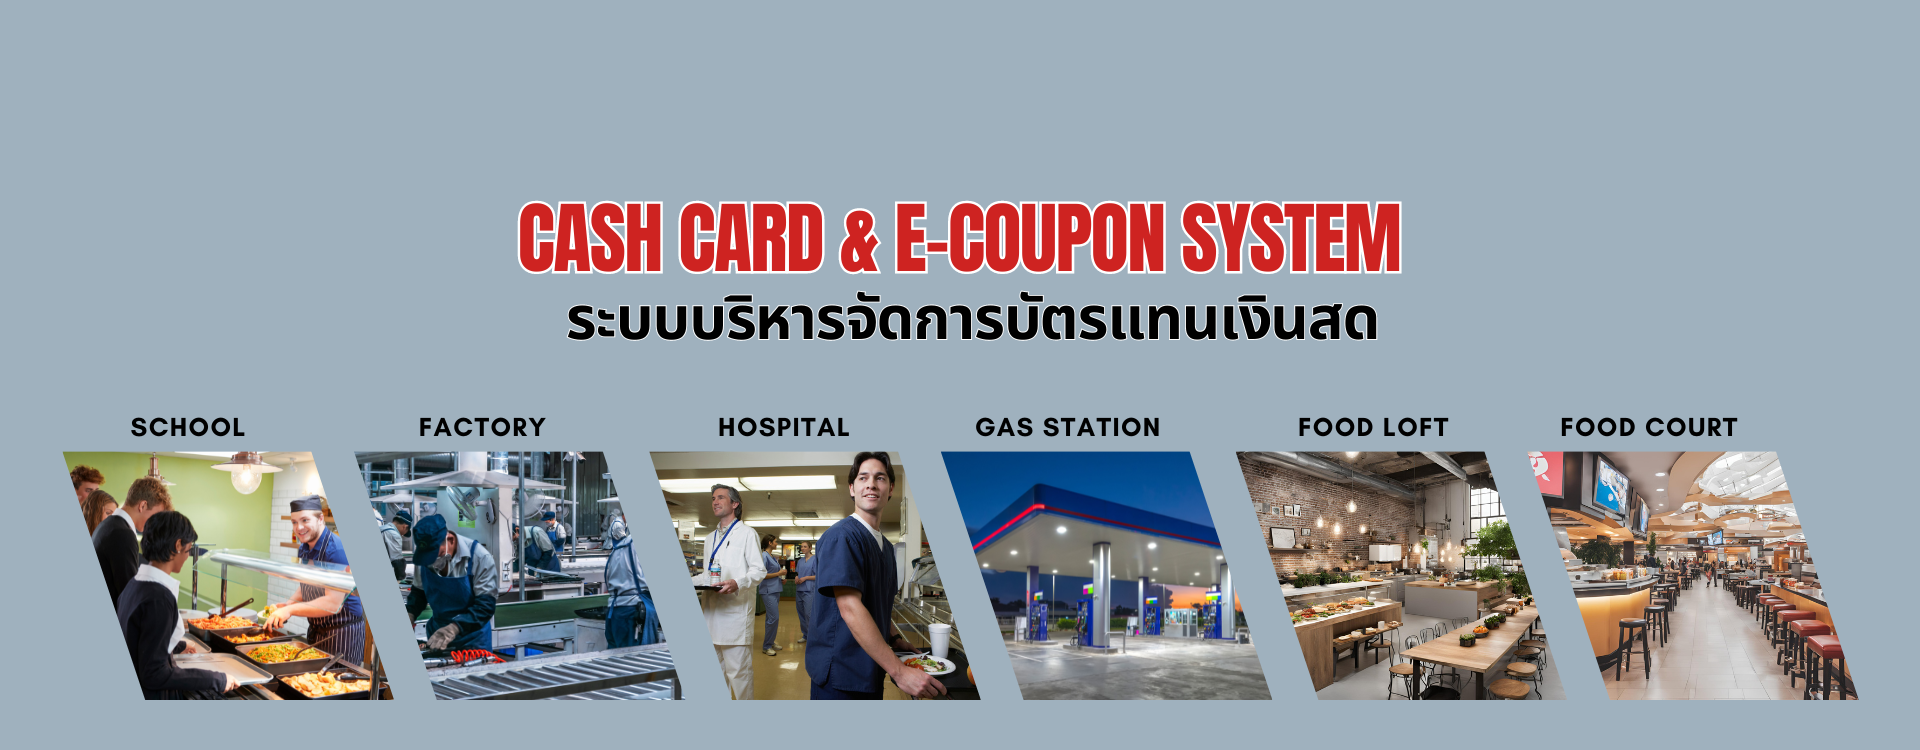 cash card E-coupon system 1